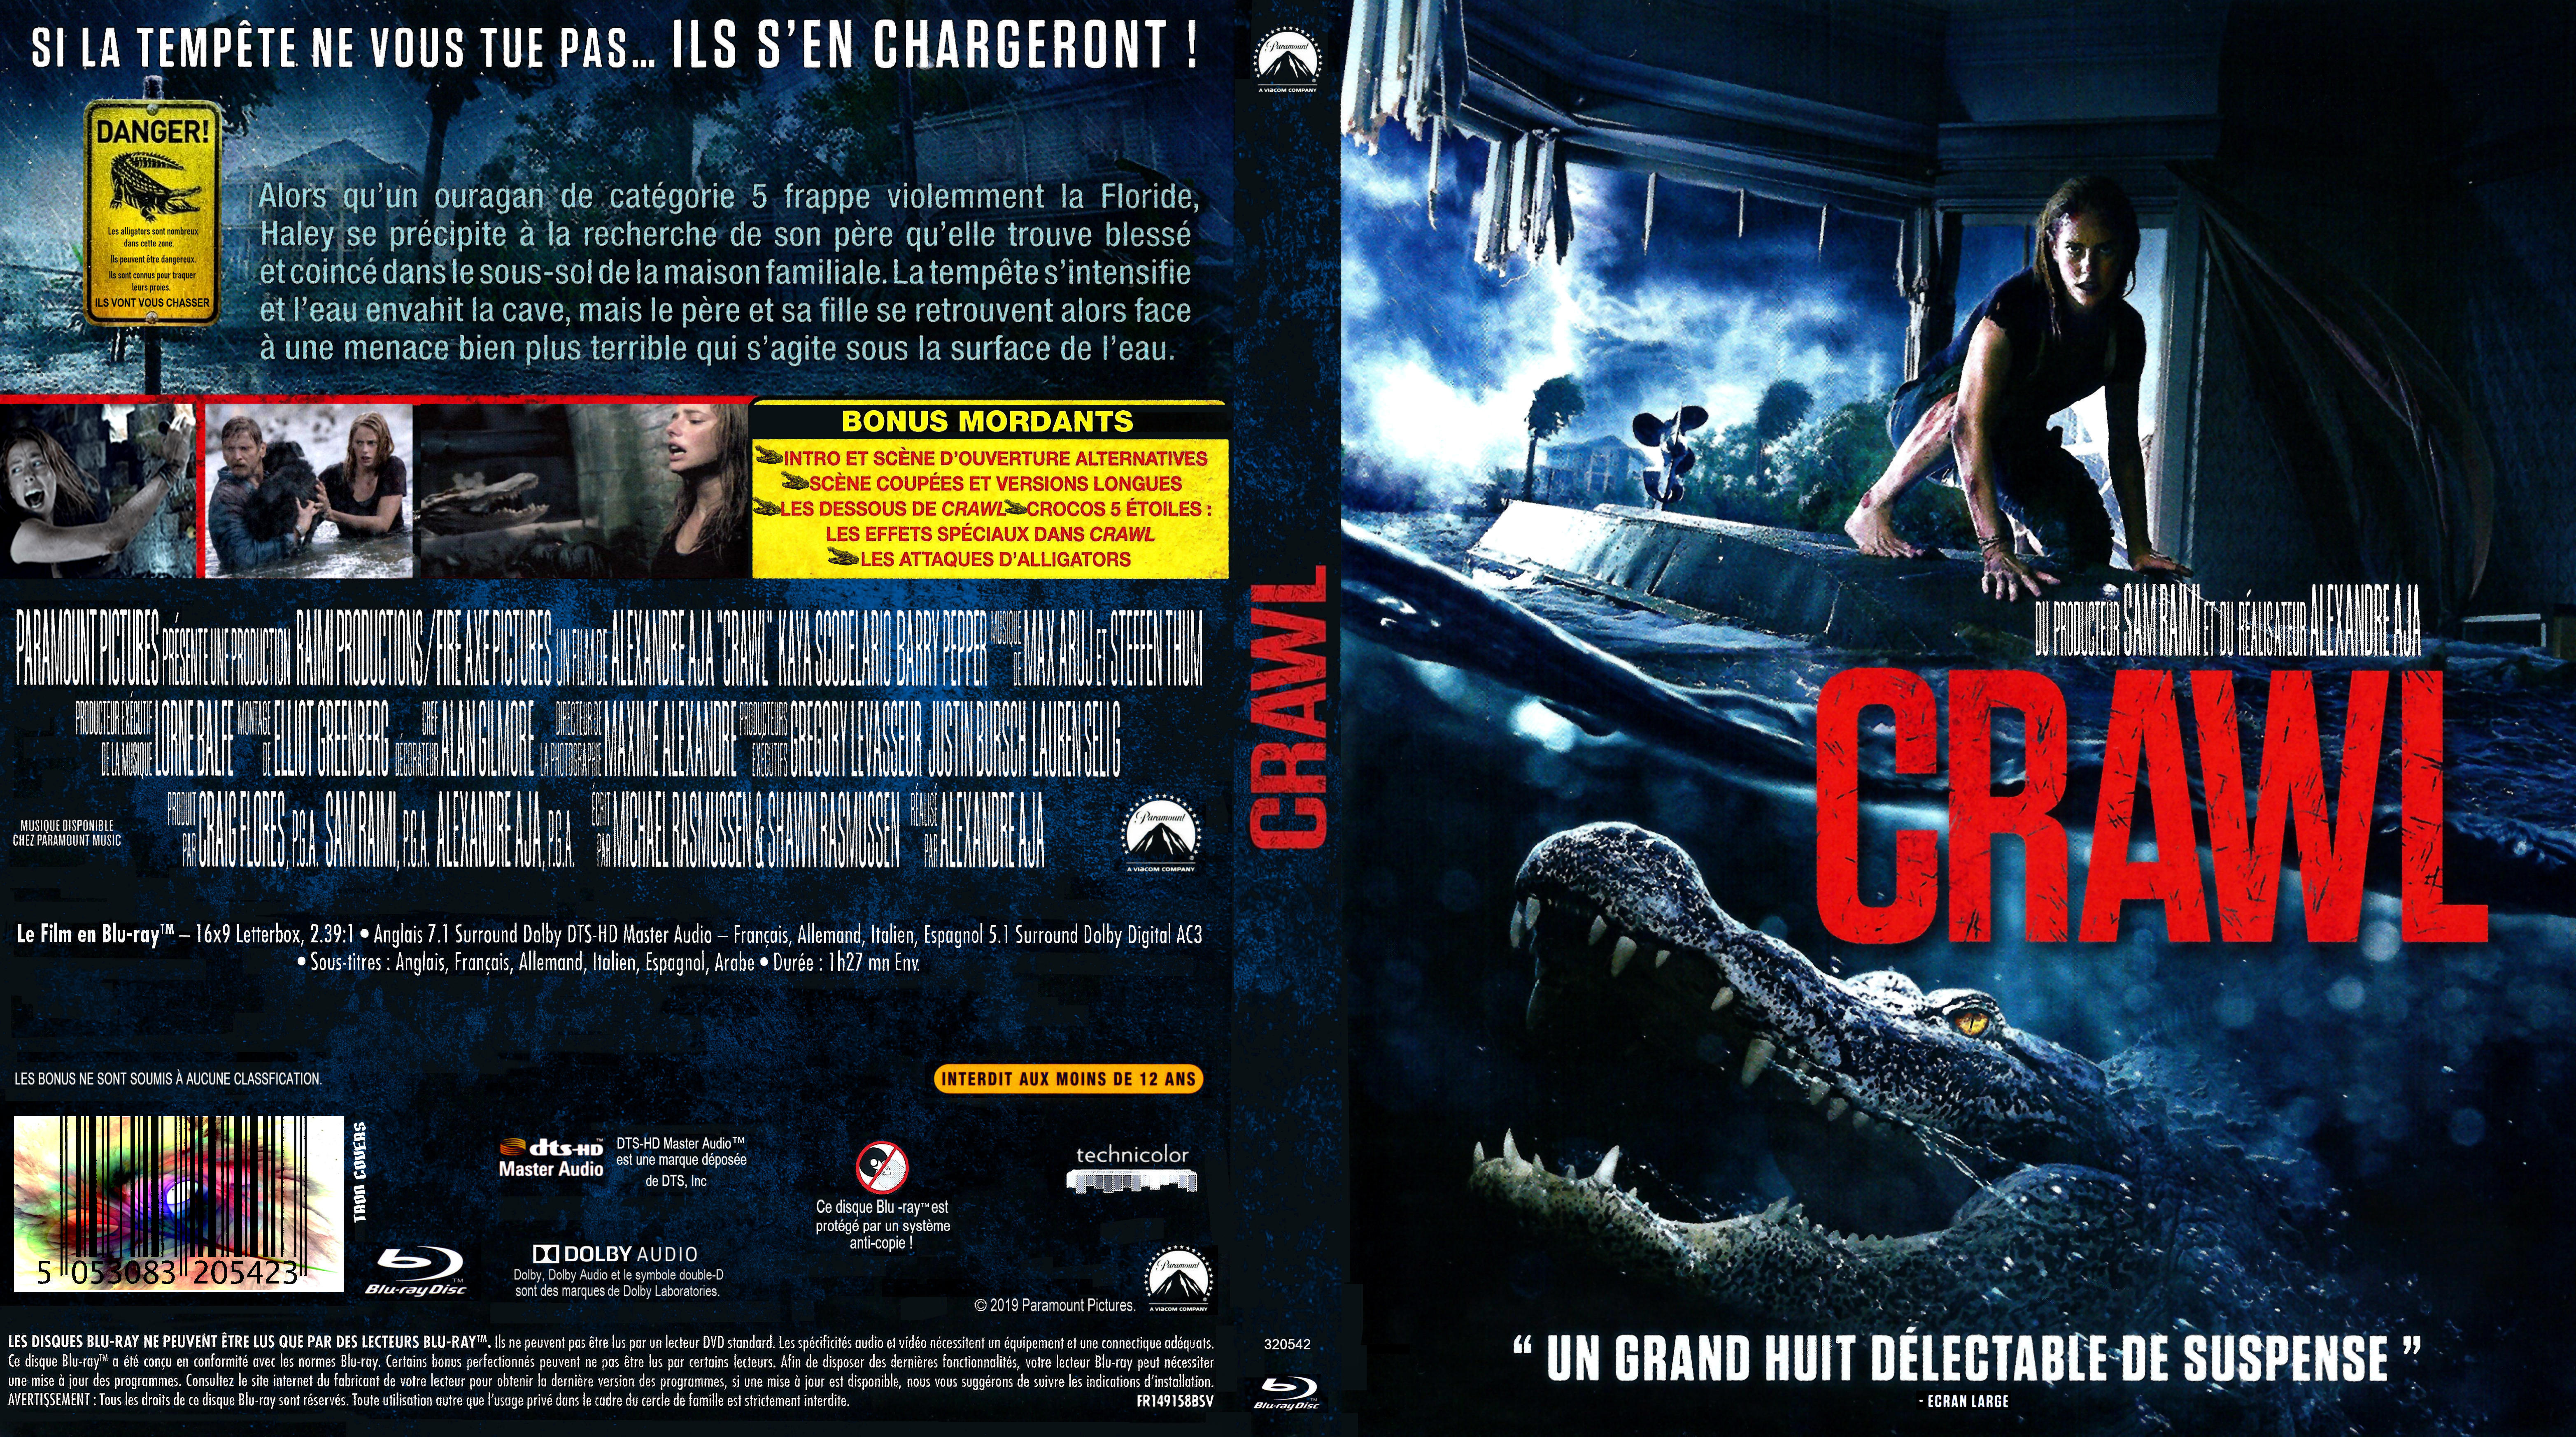 Jaquette DVD Crawl custom (BLU-RAY)